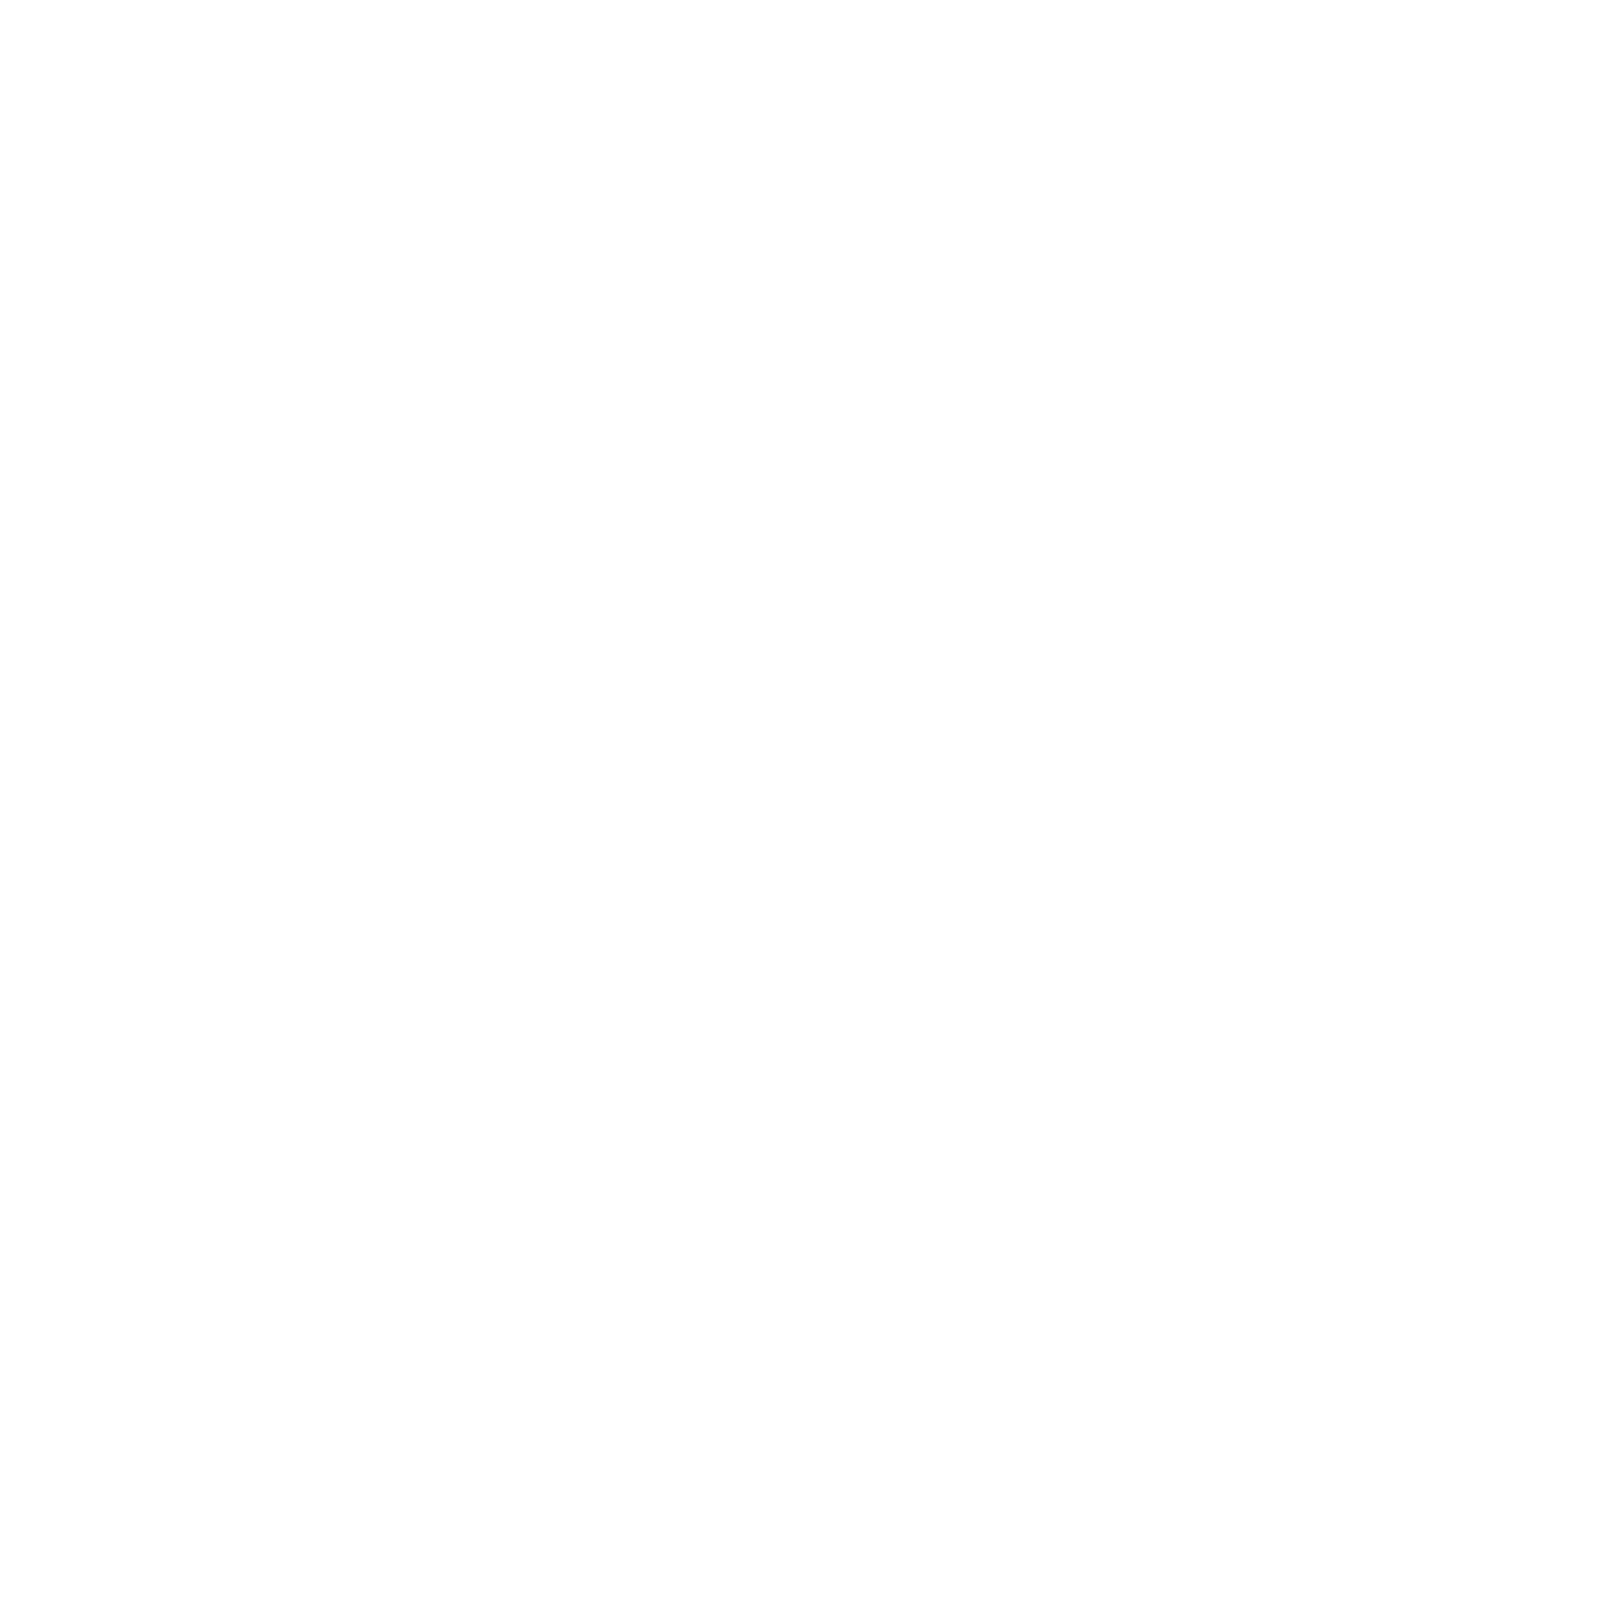 McEleney Promotions